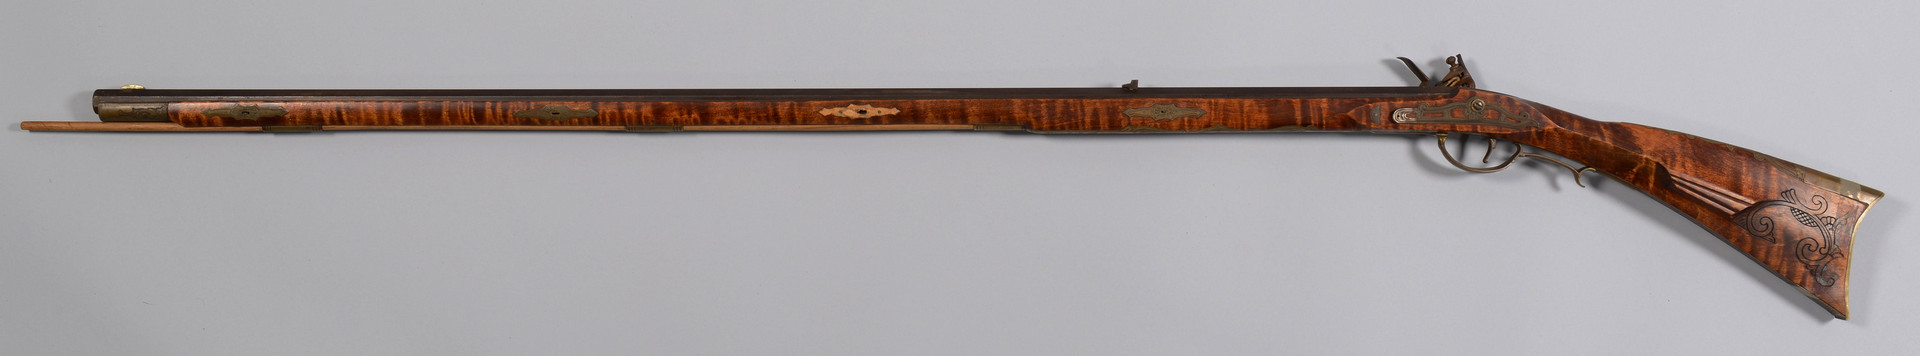 Lot 717: Two (2) Flintlock Long Rifles, Contemporary